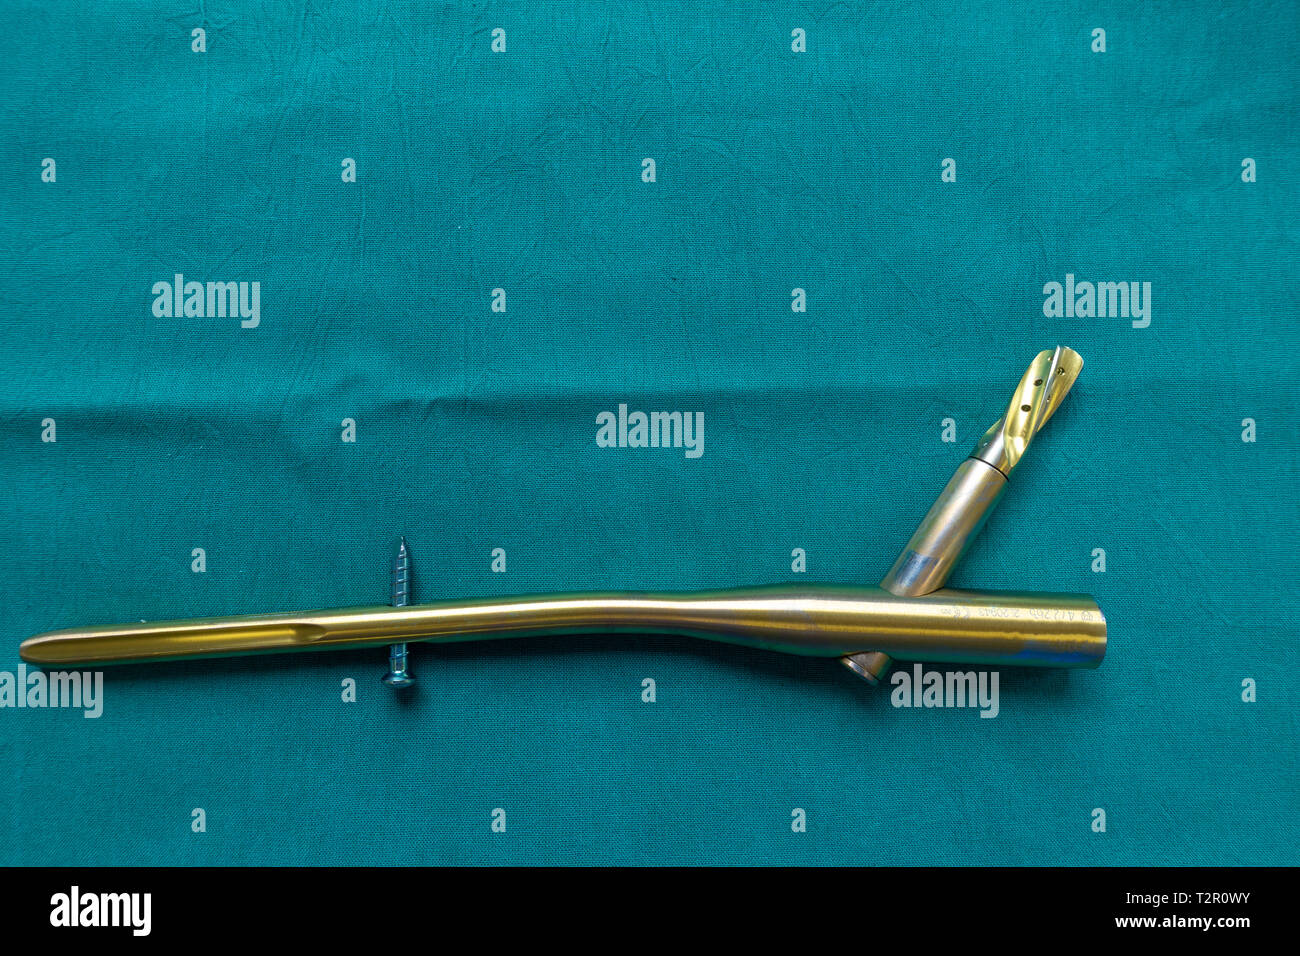 an explanted titanium femur nail on a green surgical drape Stock Photo